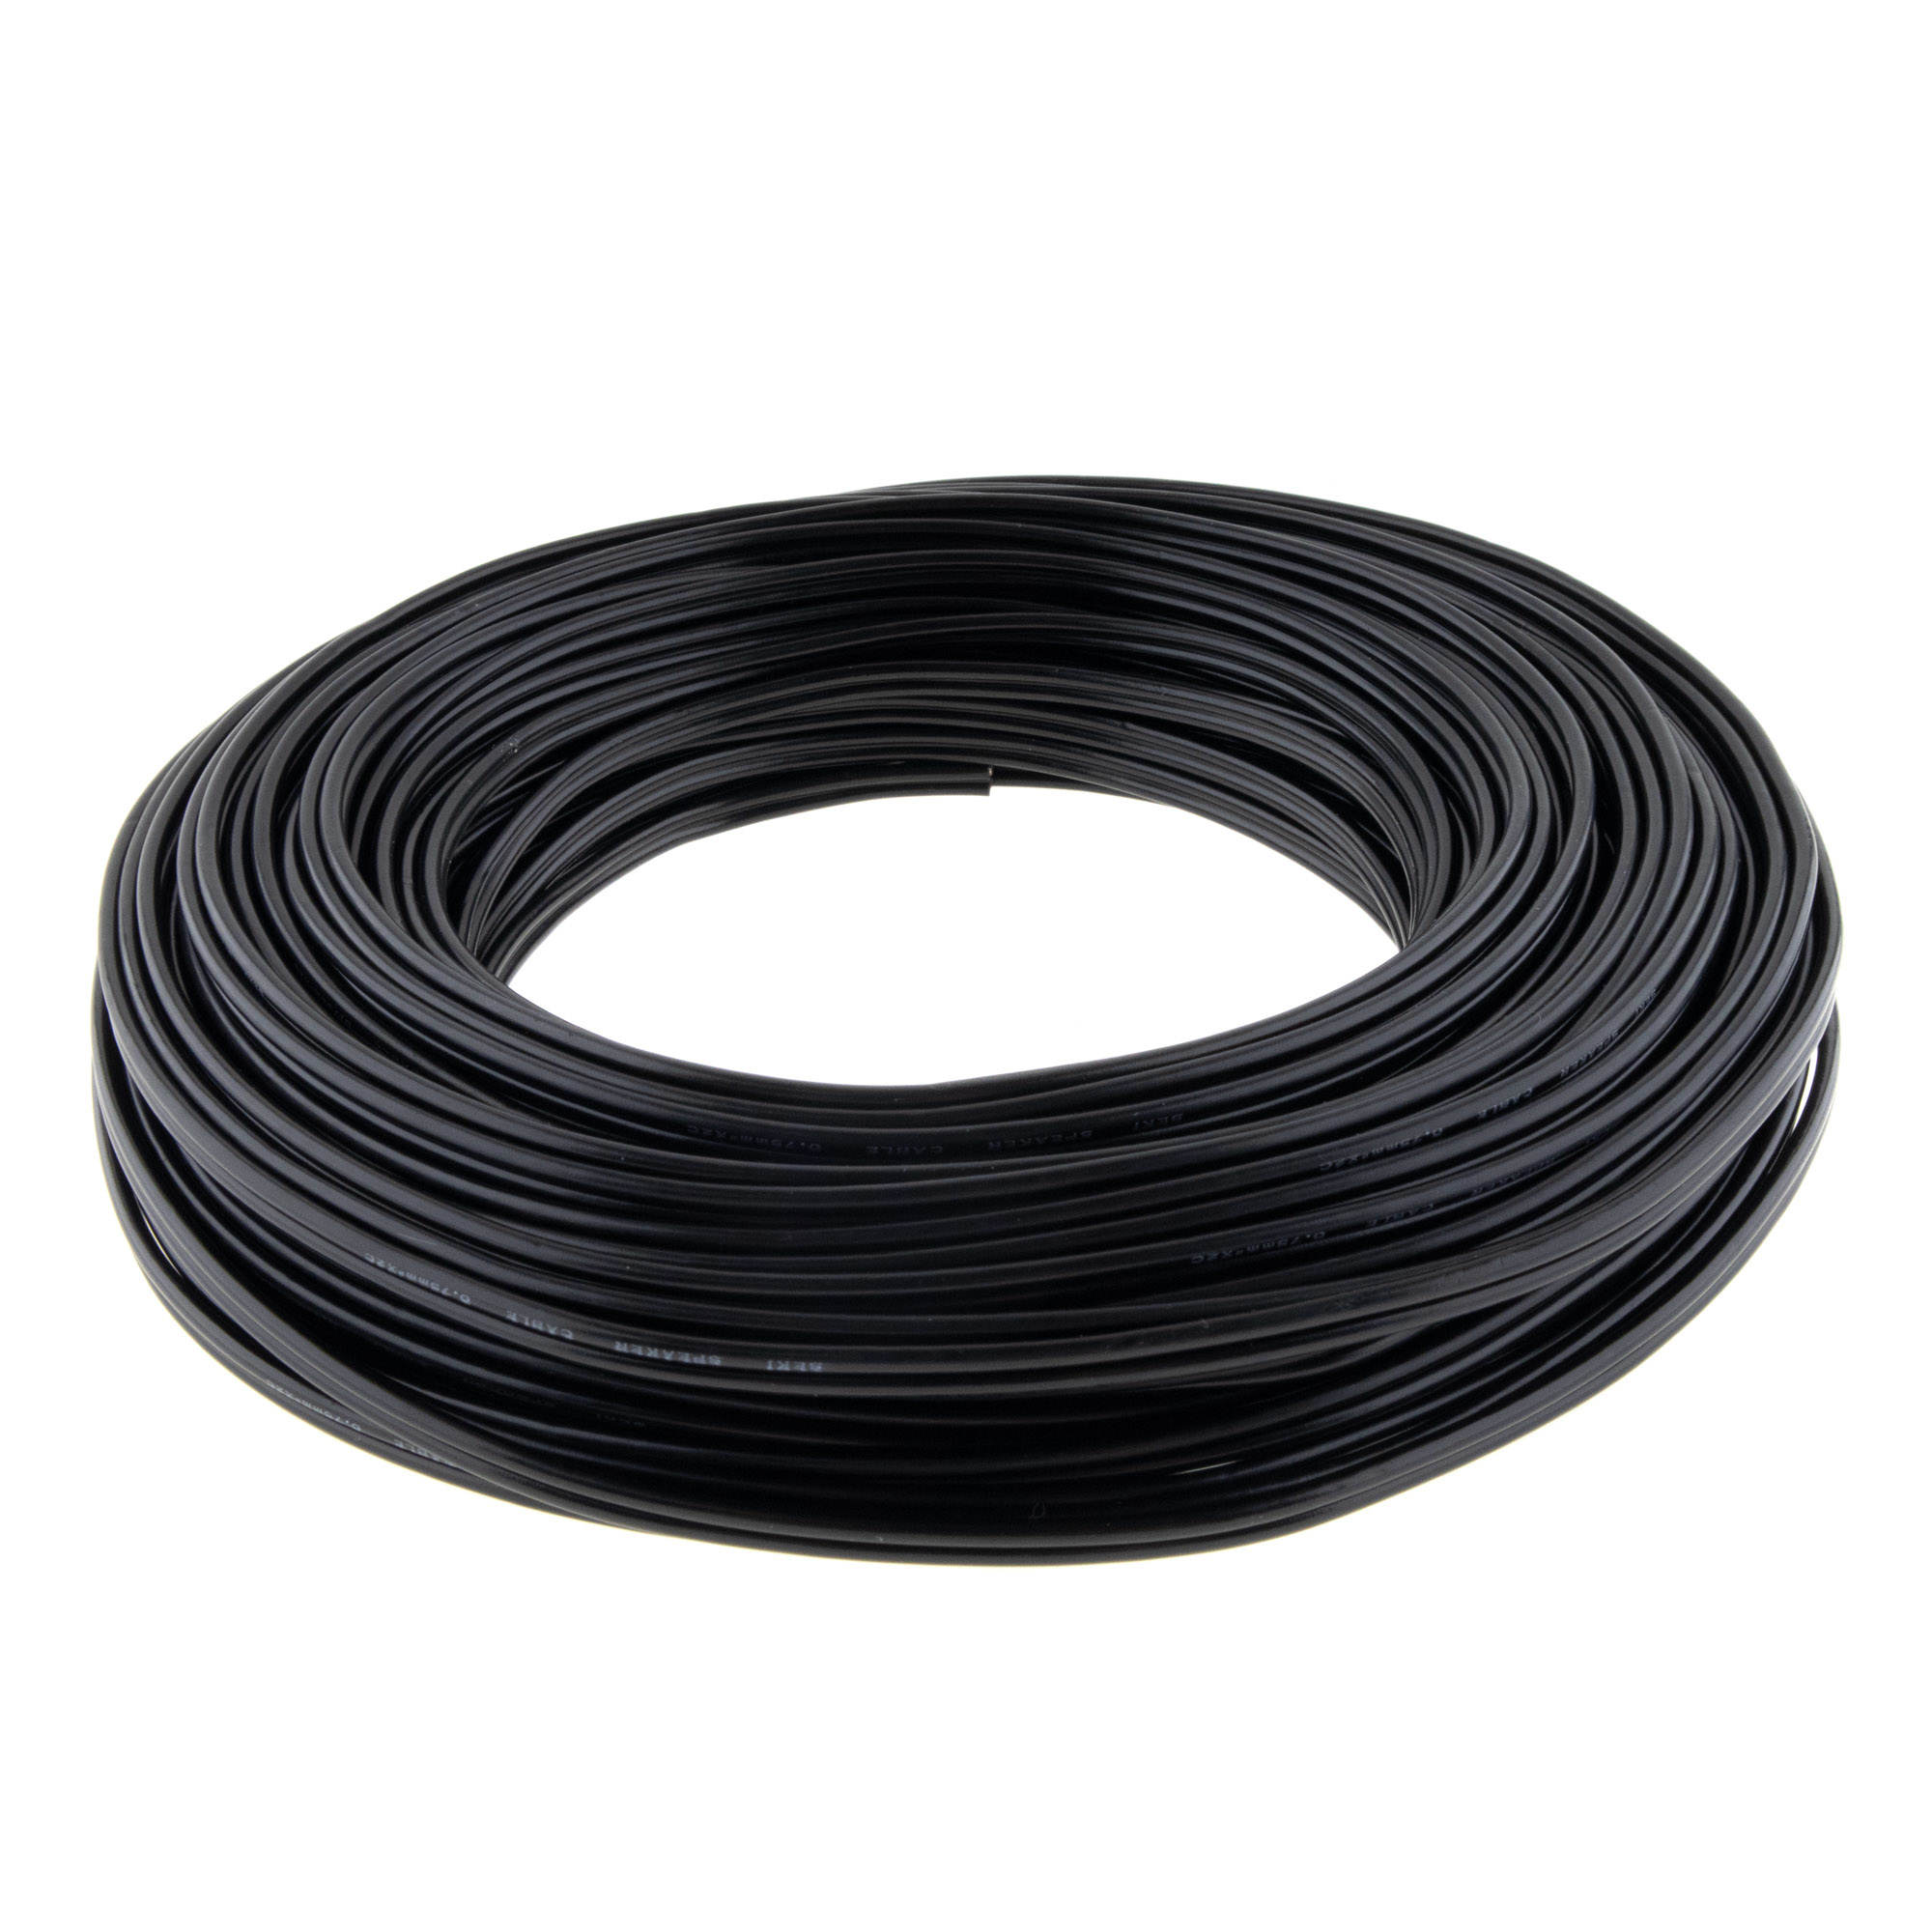 Loudspeaker cable black 25m 0.75mm